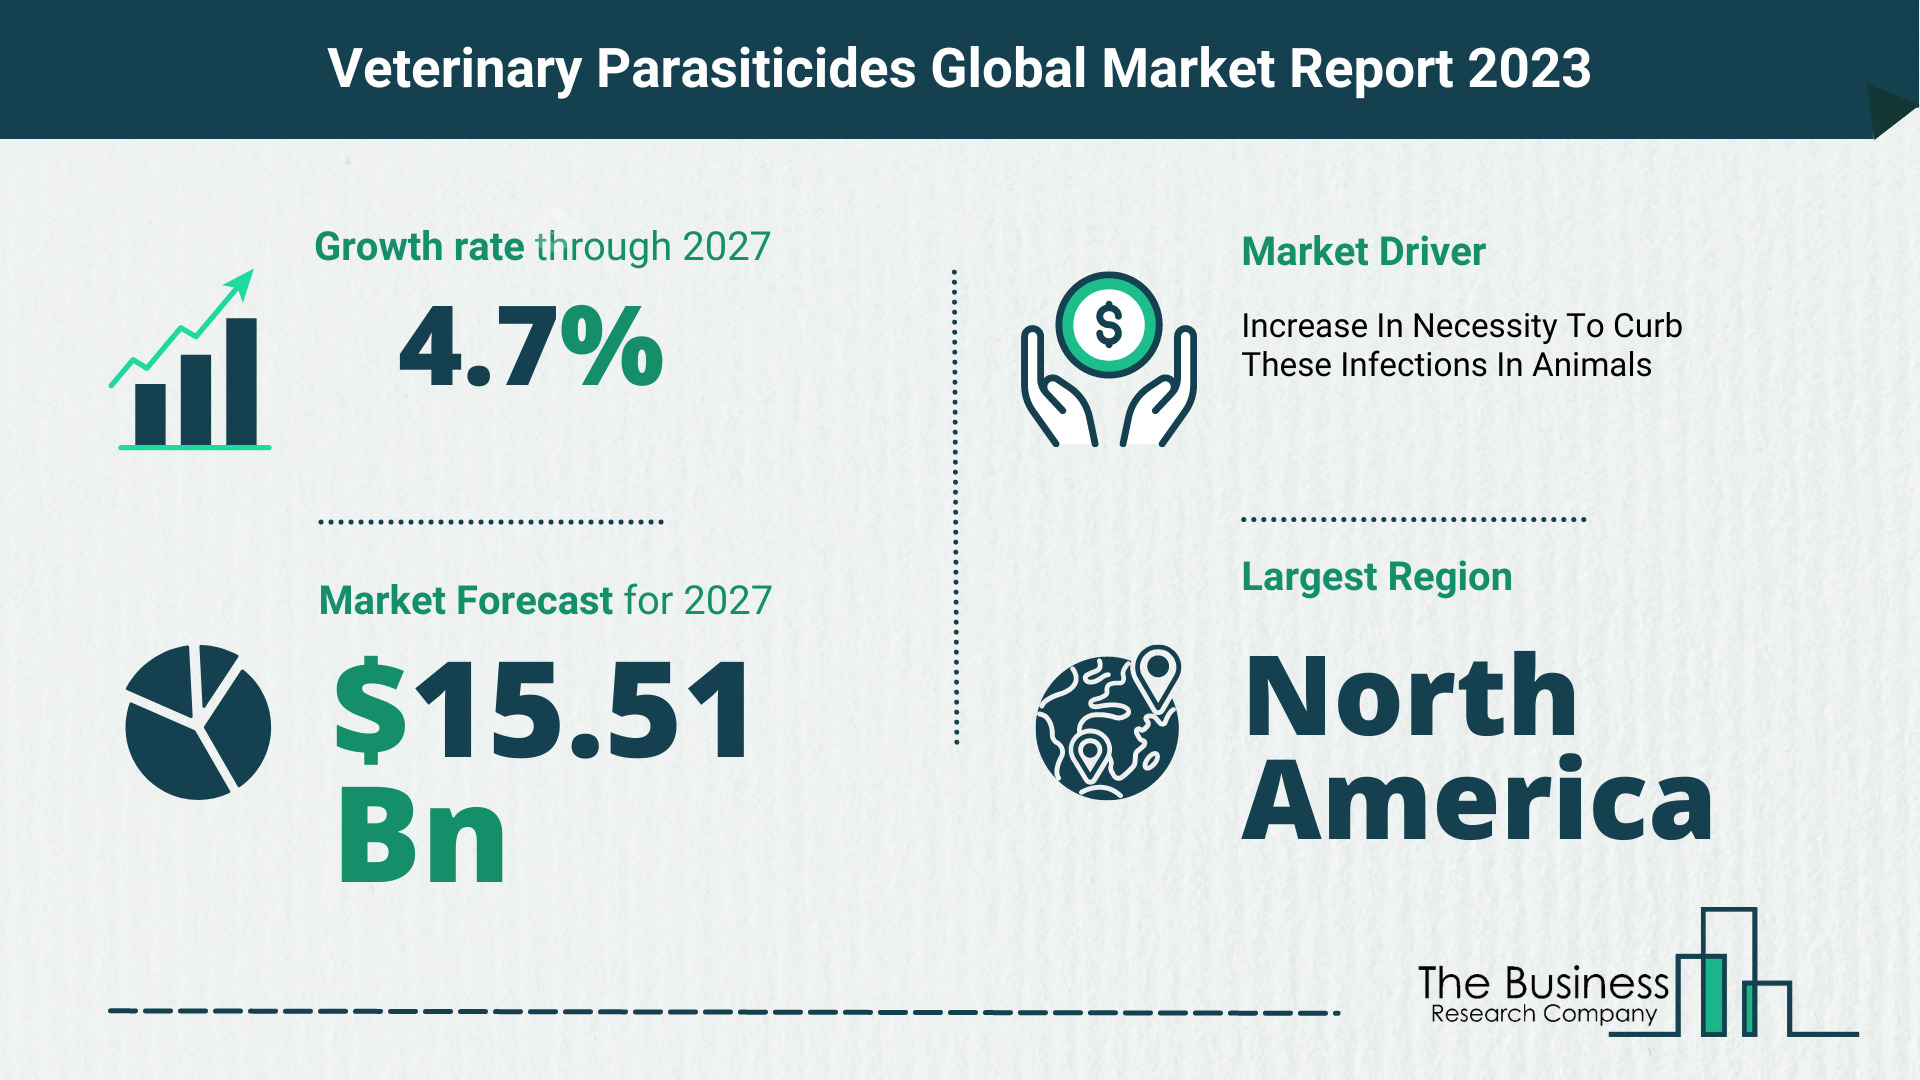 Global Veterinary Parasiticides Market Size